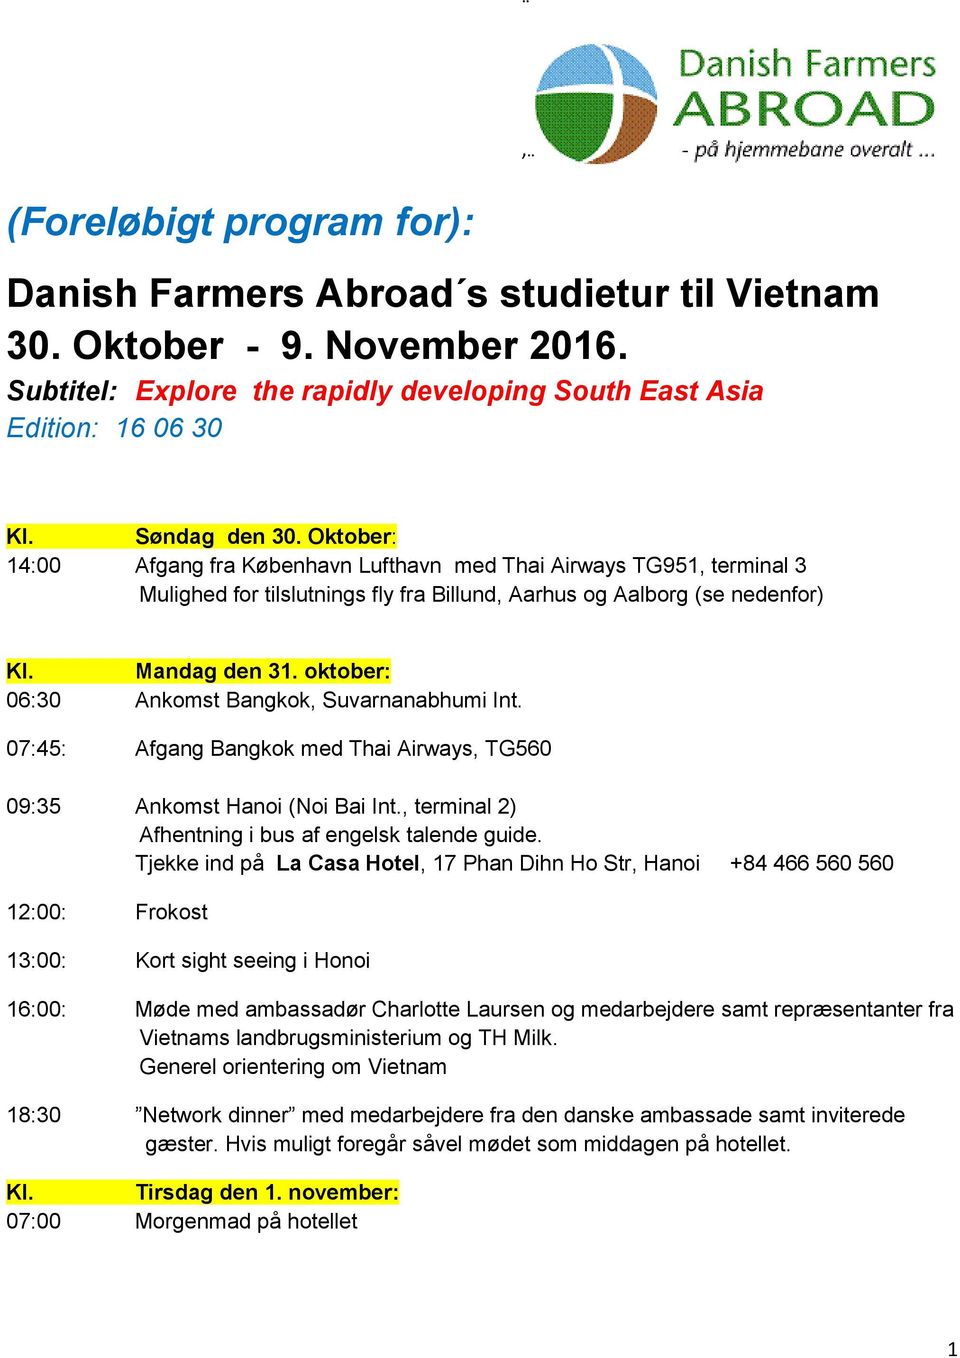 oktober: 06:30 Ankomst Bangkok, Suvarnanabhumi Int. 07:45: Afgang Bangkok med Thai Airways, TG560 09:35 Ankomst Hanoi (Noi Bai Int., terminal 2) Afhentning i bus af engelsk talende guide.